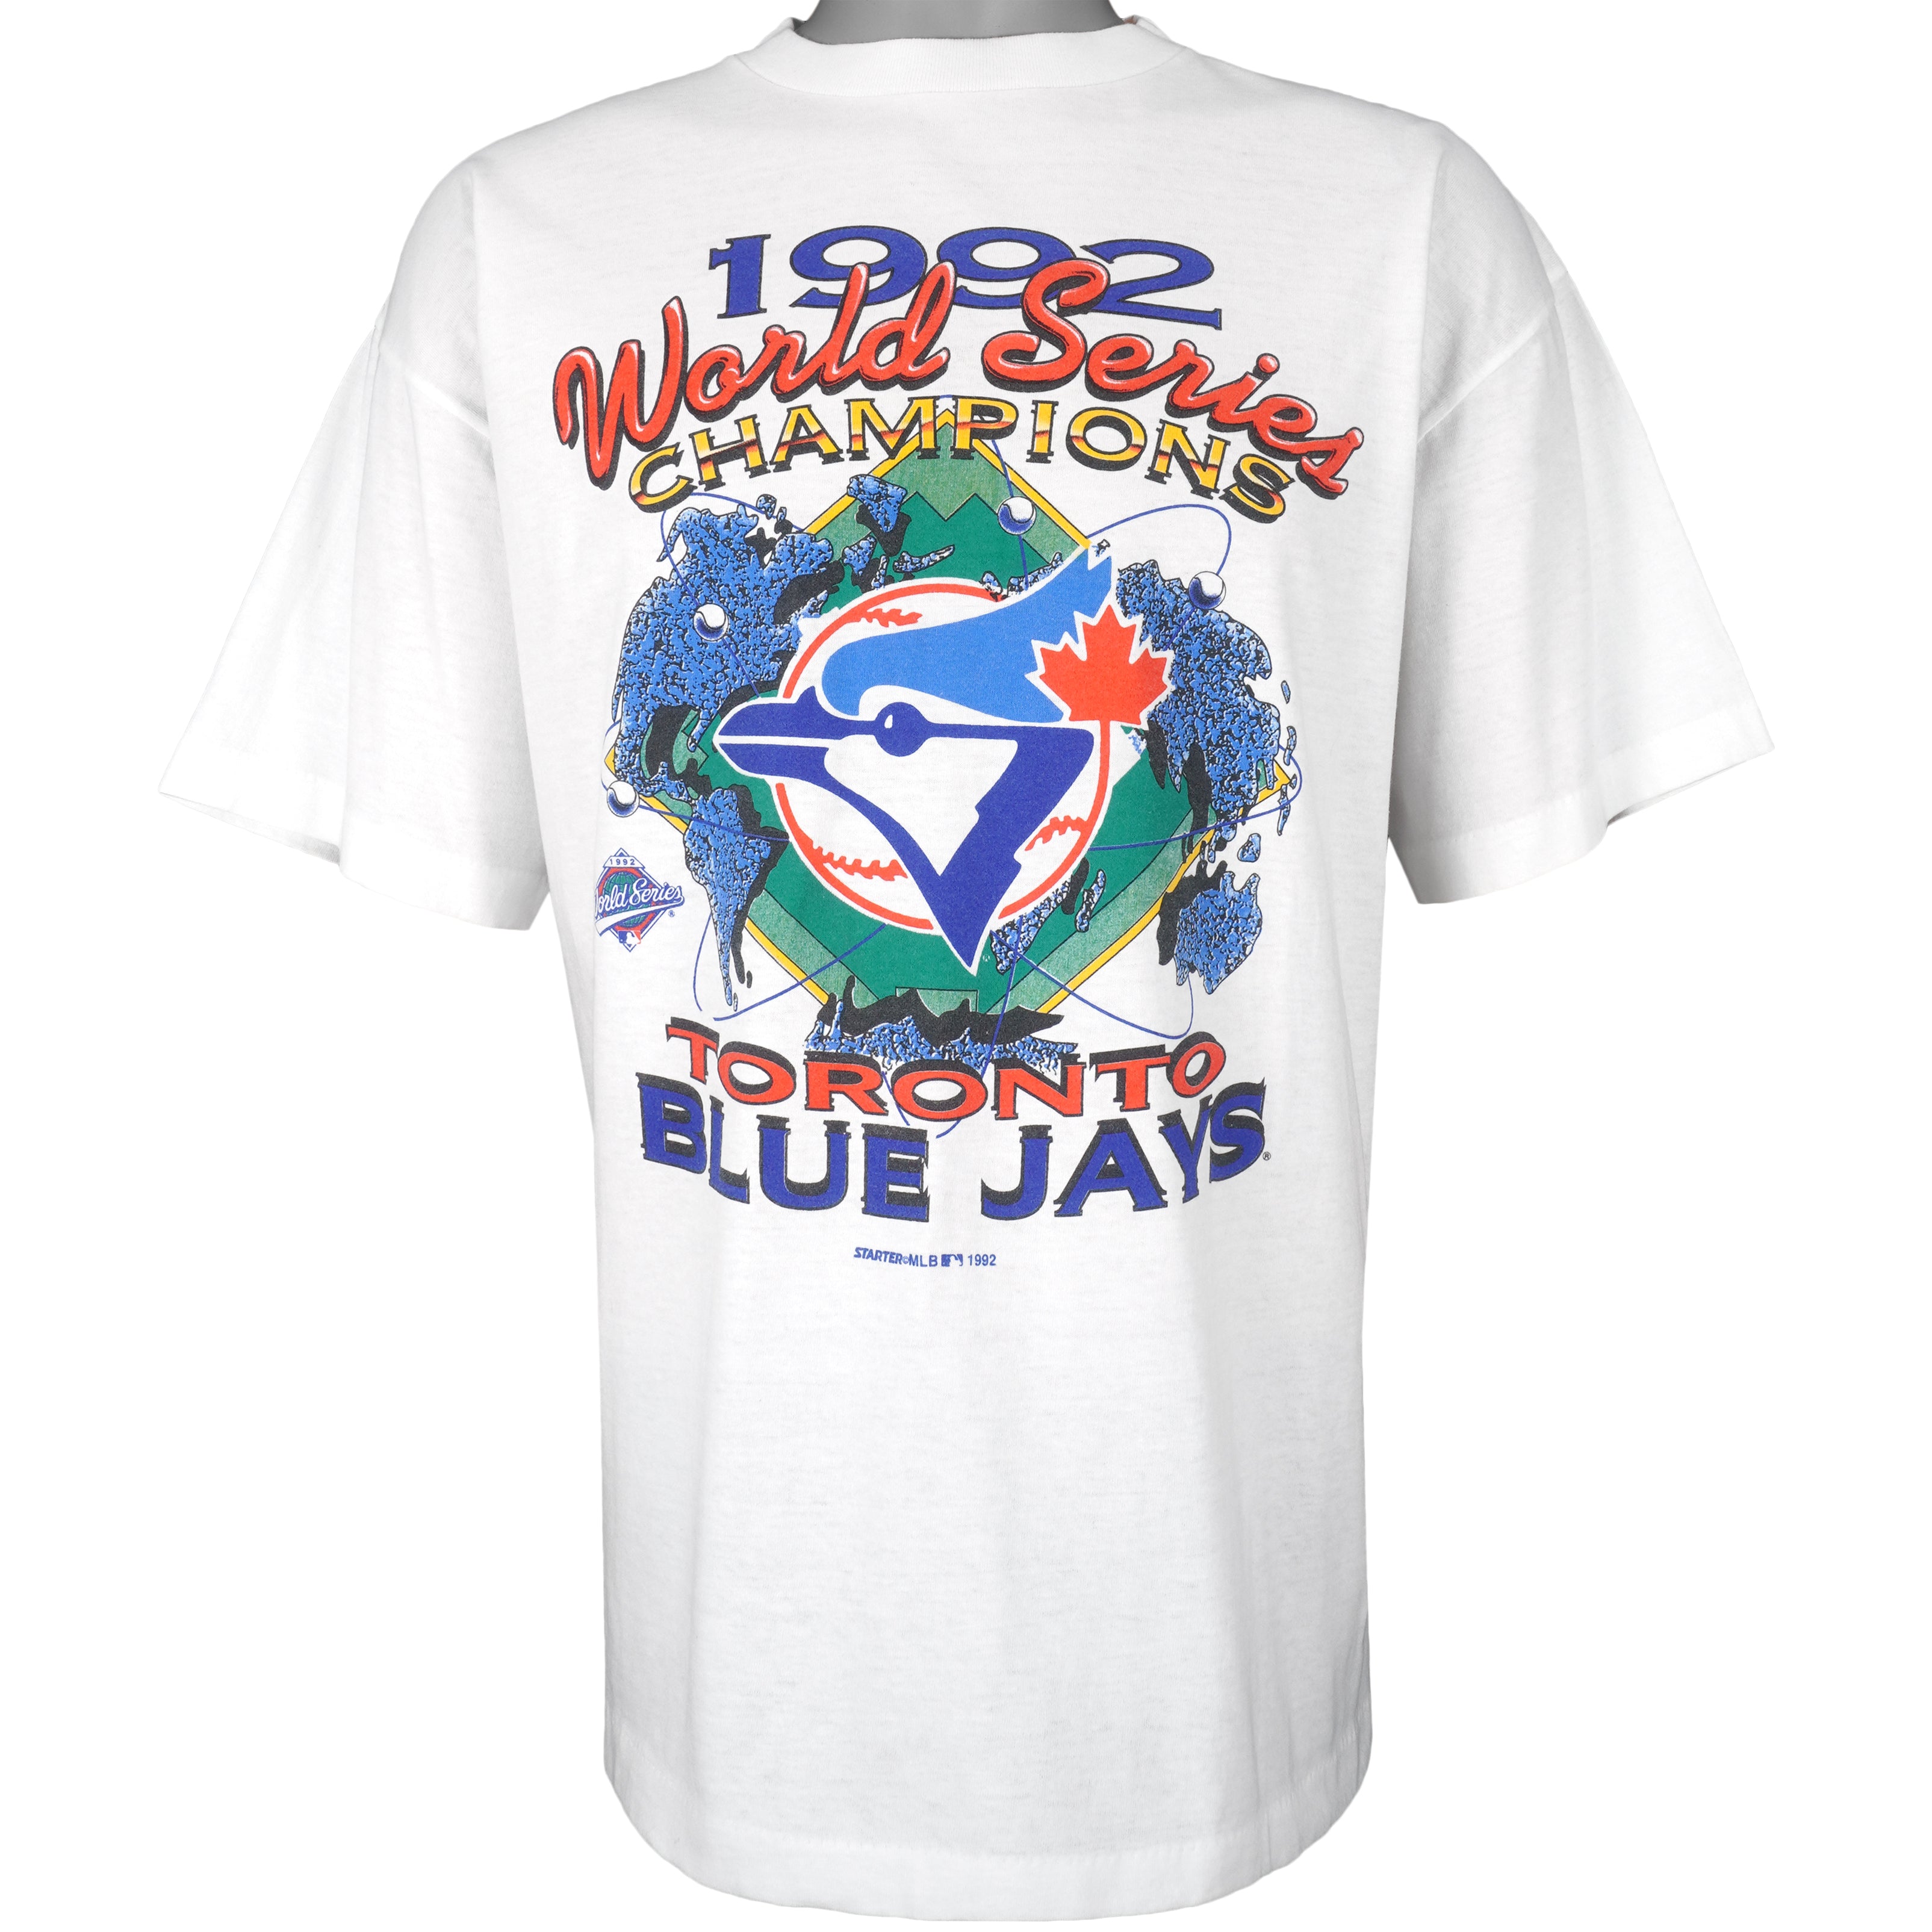 Toronto Blue Jays World Series 1992 Trench Canada Sweatshirt 